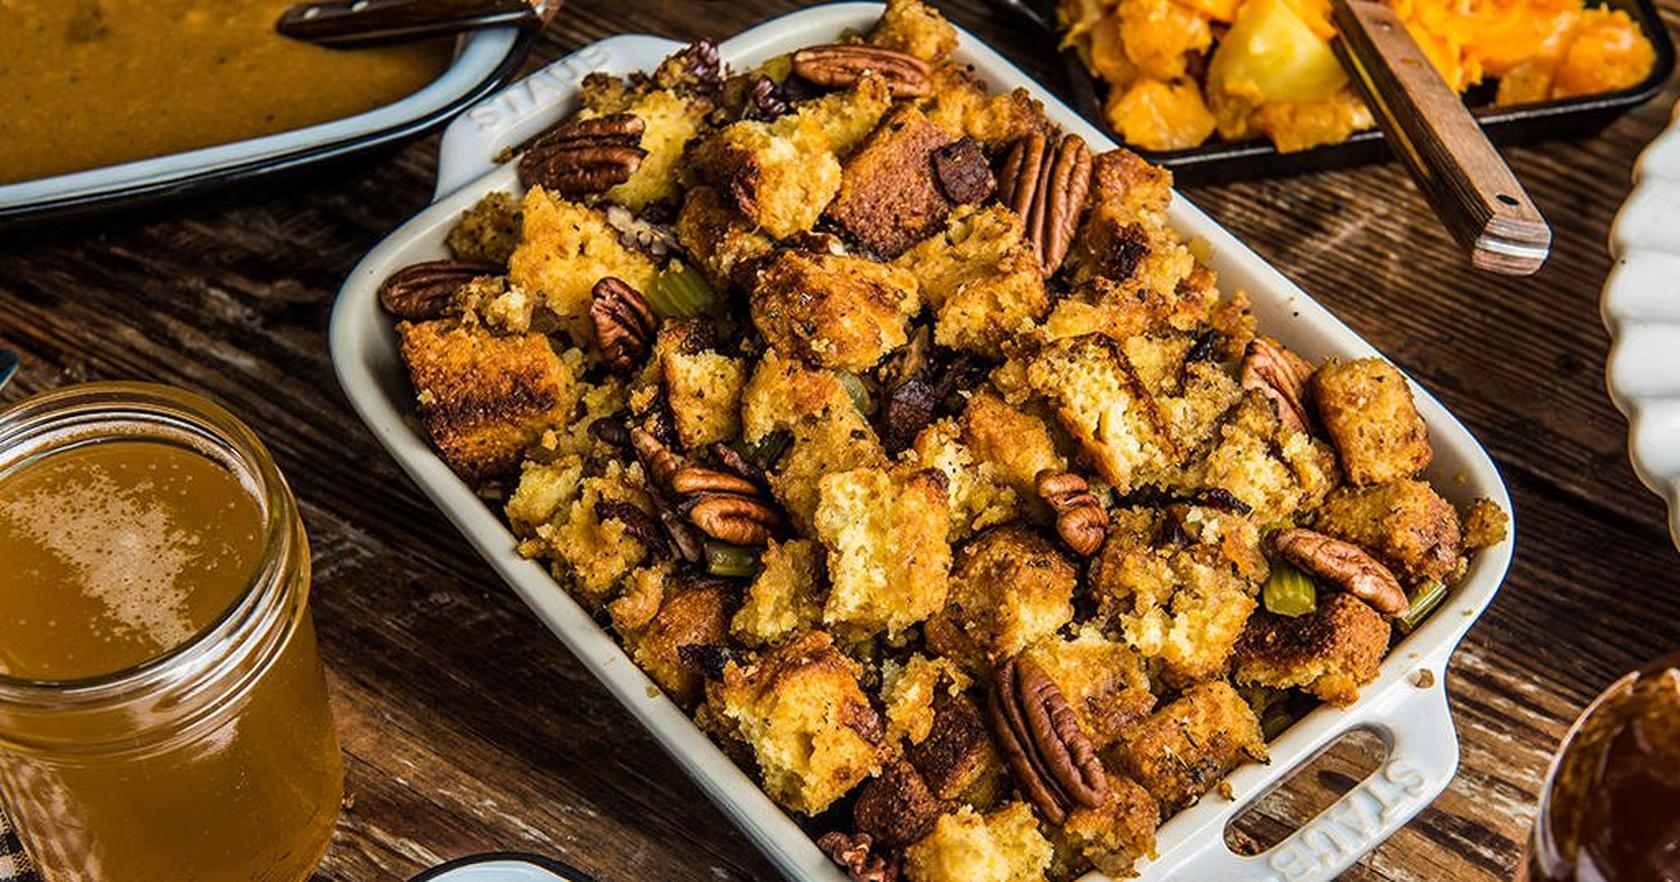 Gluten-Free Thanksgiving Recipes